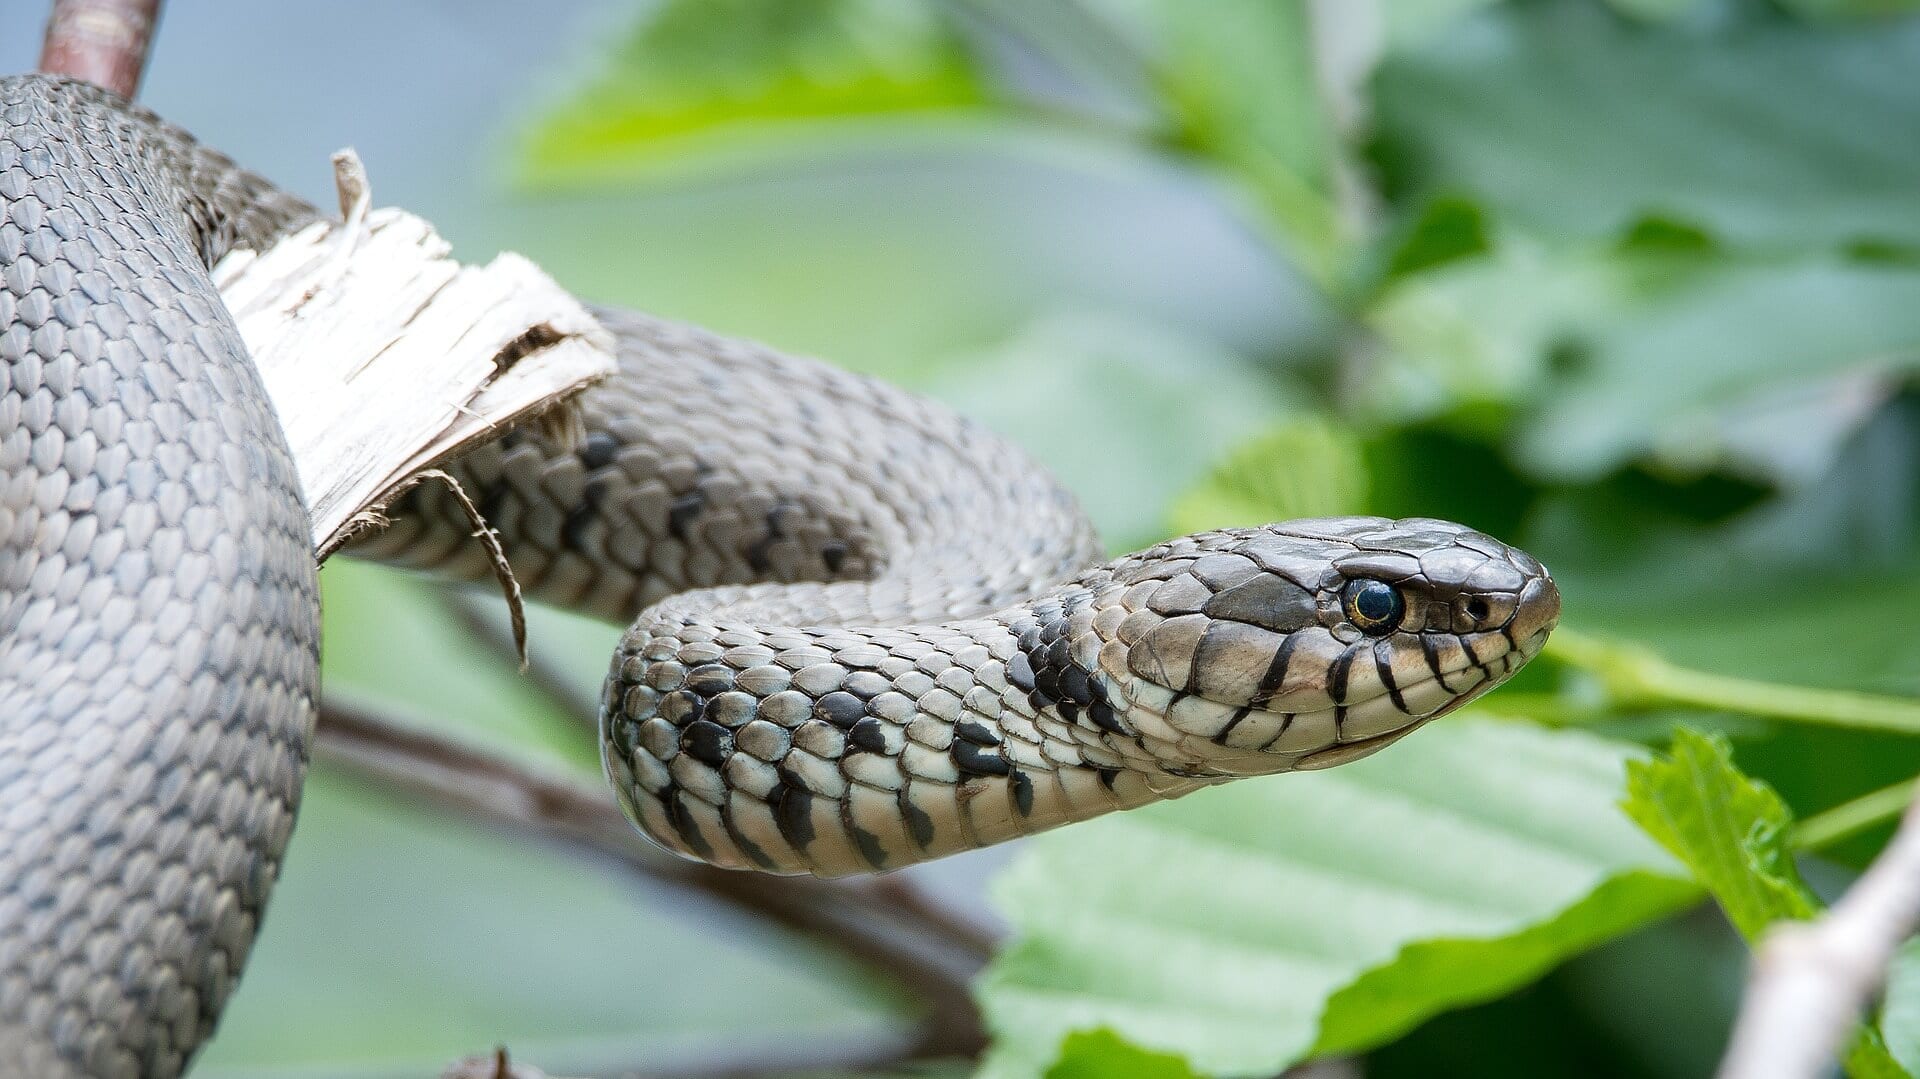 https://pixabay.com/en/grass-snake-natrix-helvetica-snake-2104087/